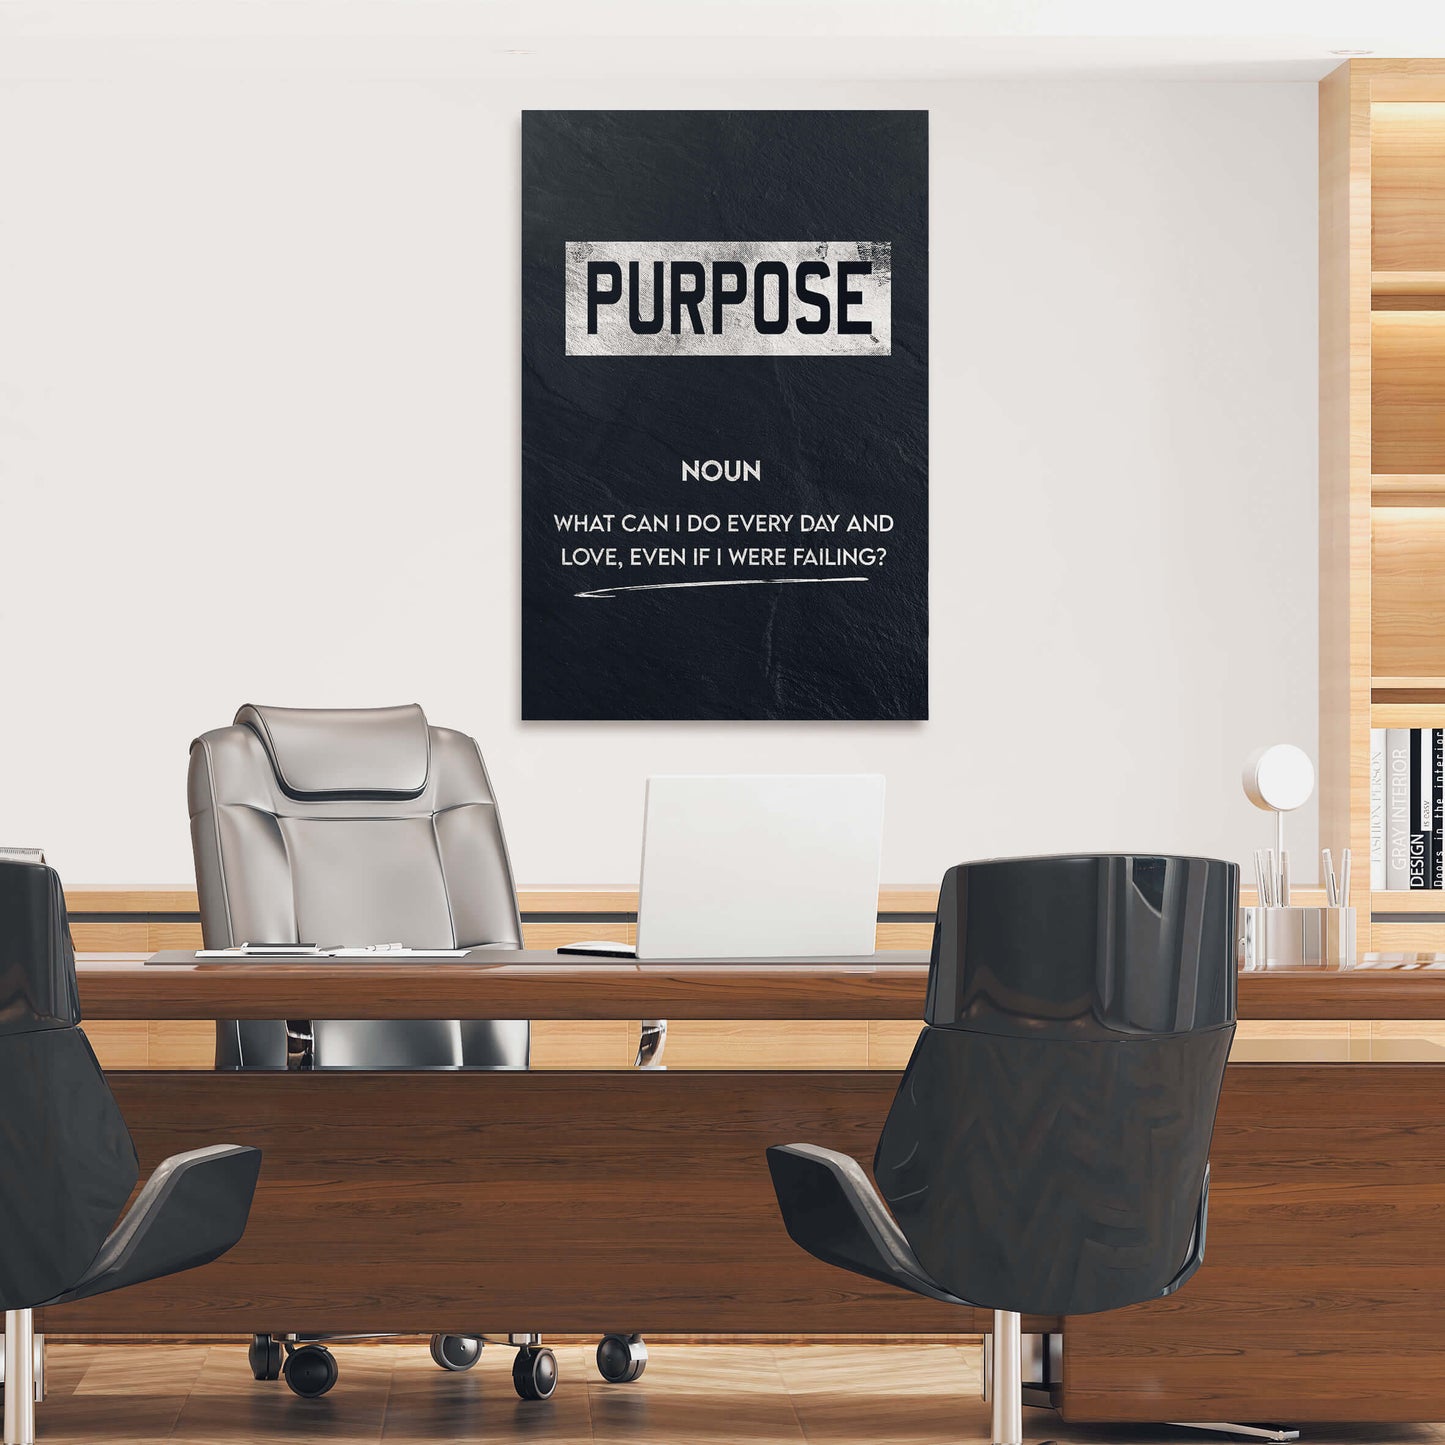 Purpose Meaning Wall Art | Inspirational Wall Art Motivational Wall Art Quotes Office Art | ImpaktMaker Exclusive Canvas Art Portrait